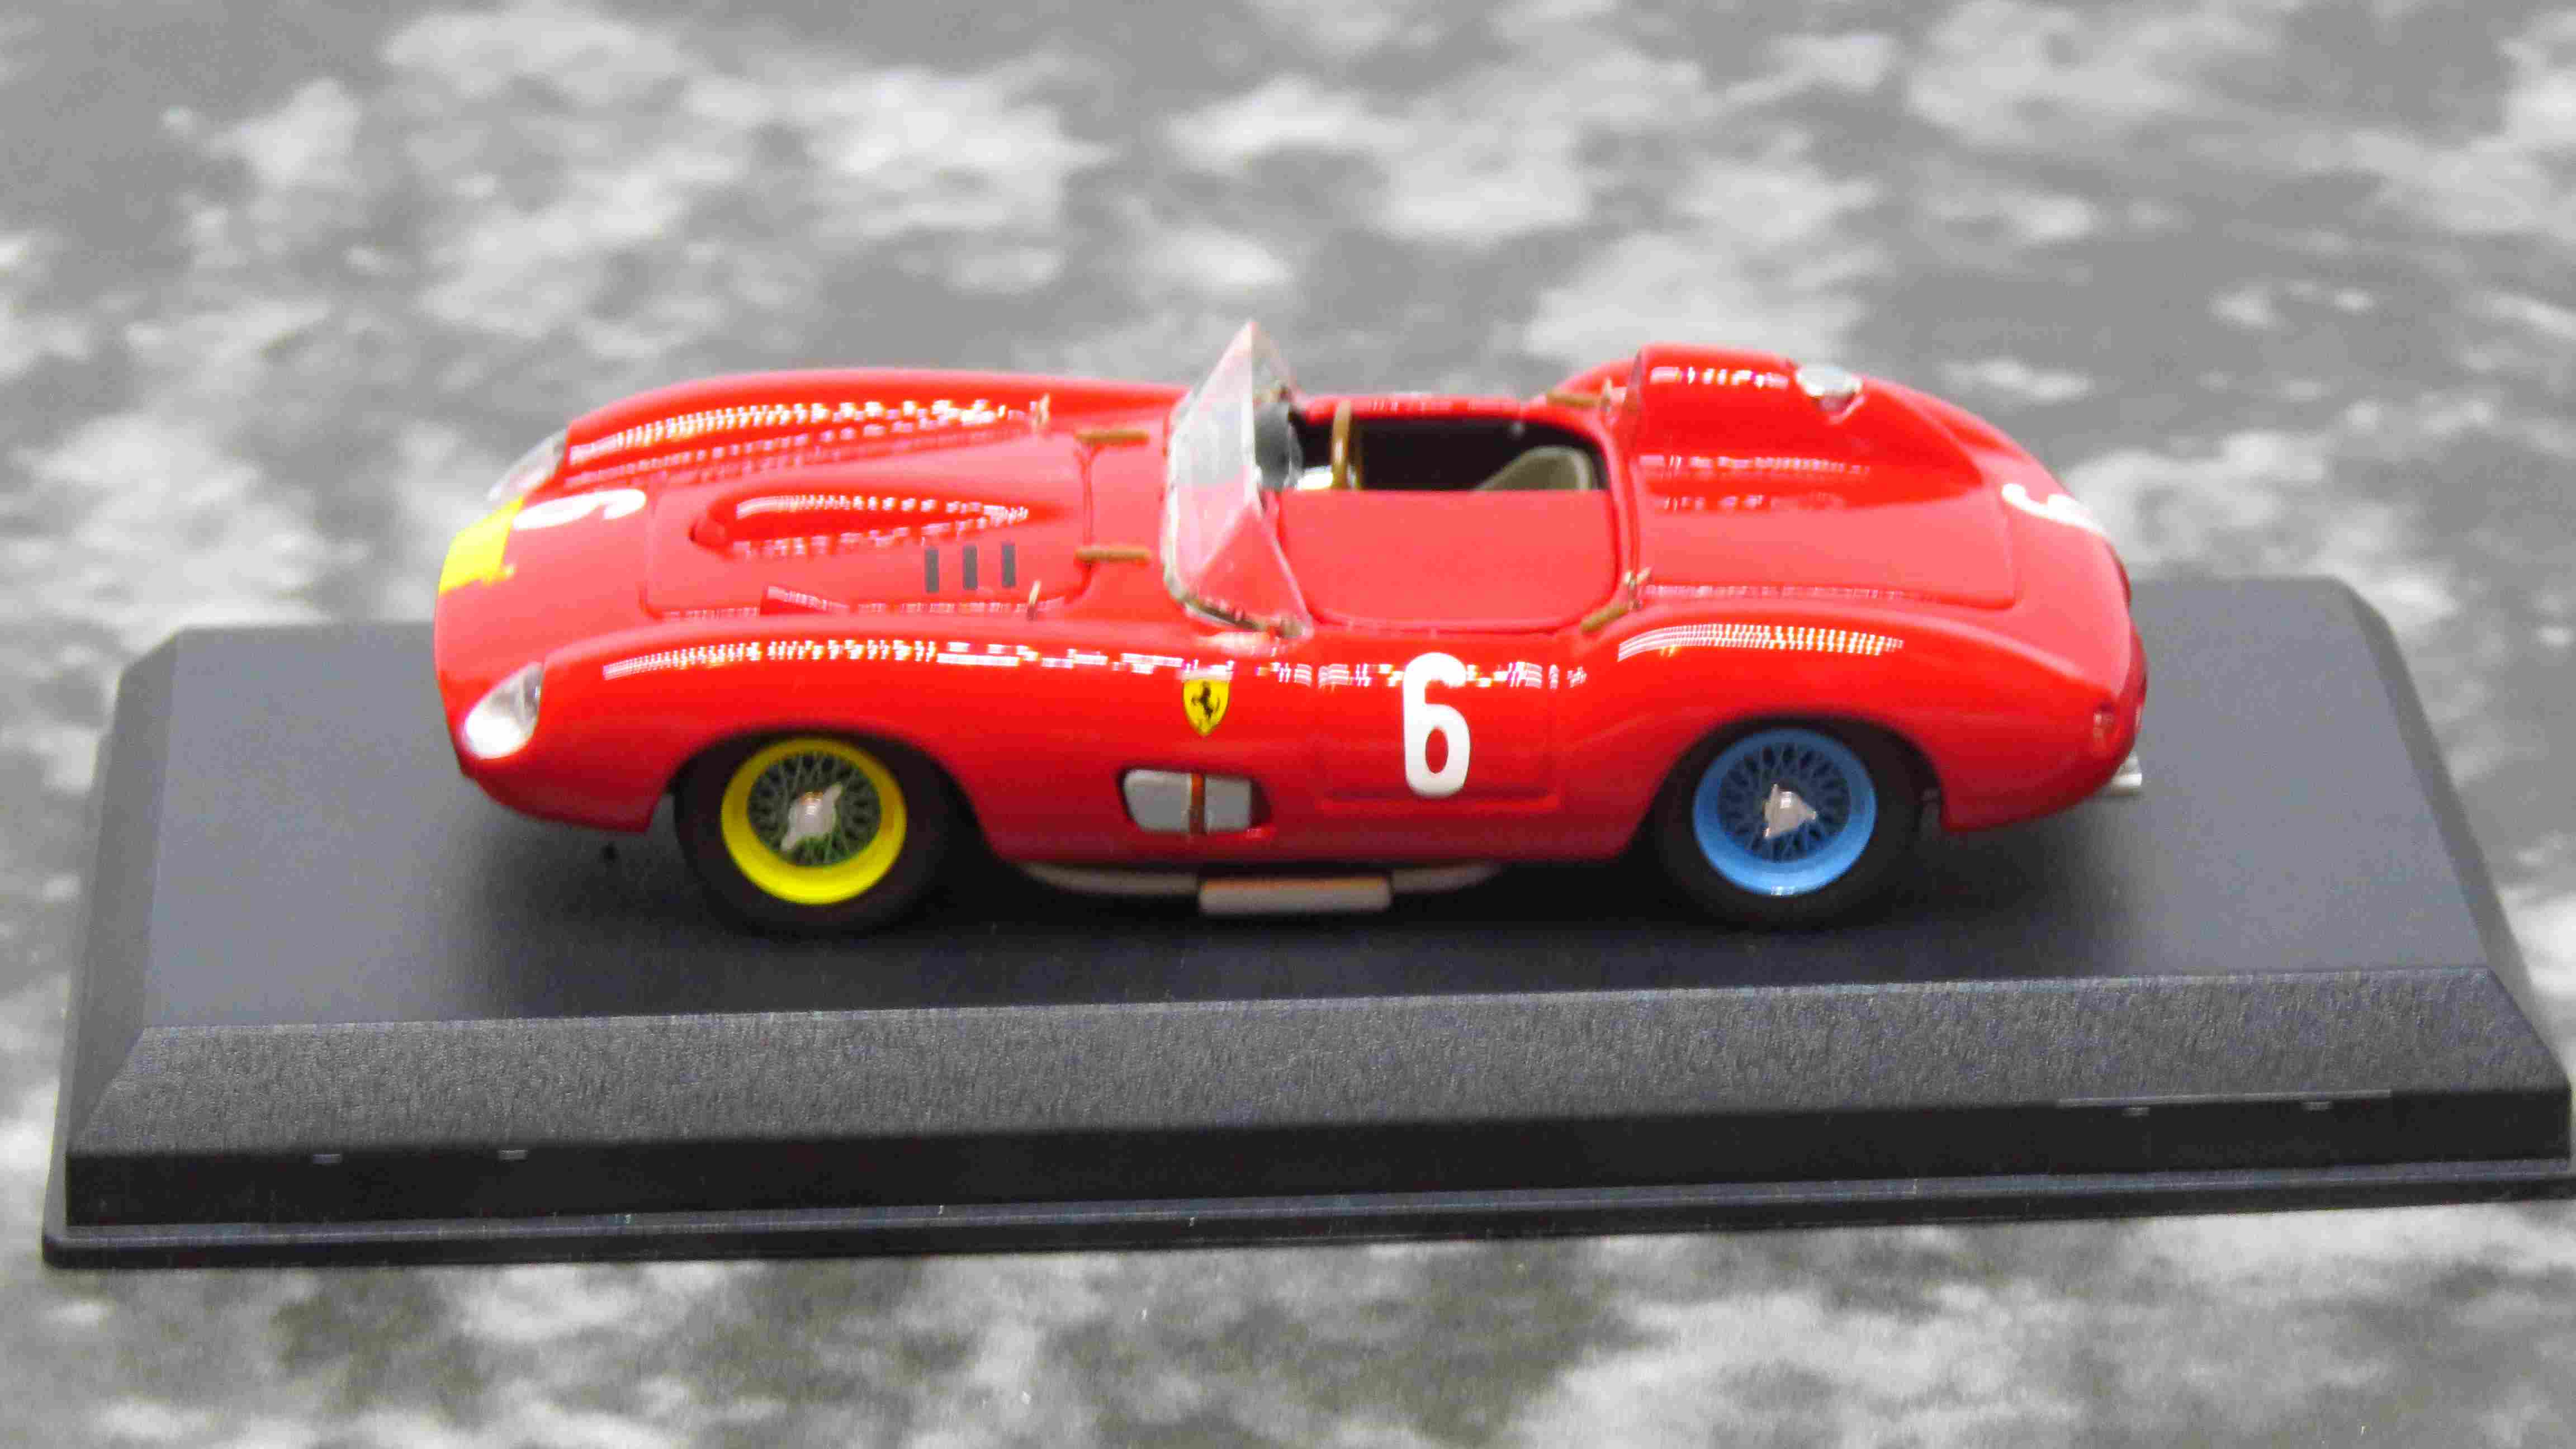 FERRARI 315 S - 1000 Km Nurburgring 1957 - Hawthorn / Trintignant N 6 #0656 3rd /ART ART419 1:43/